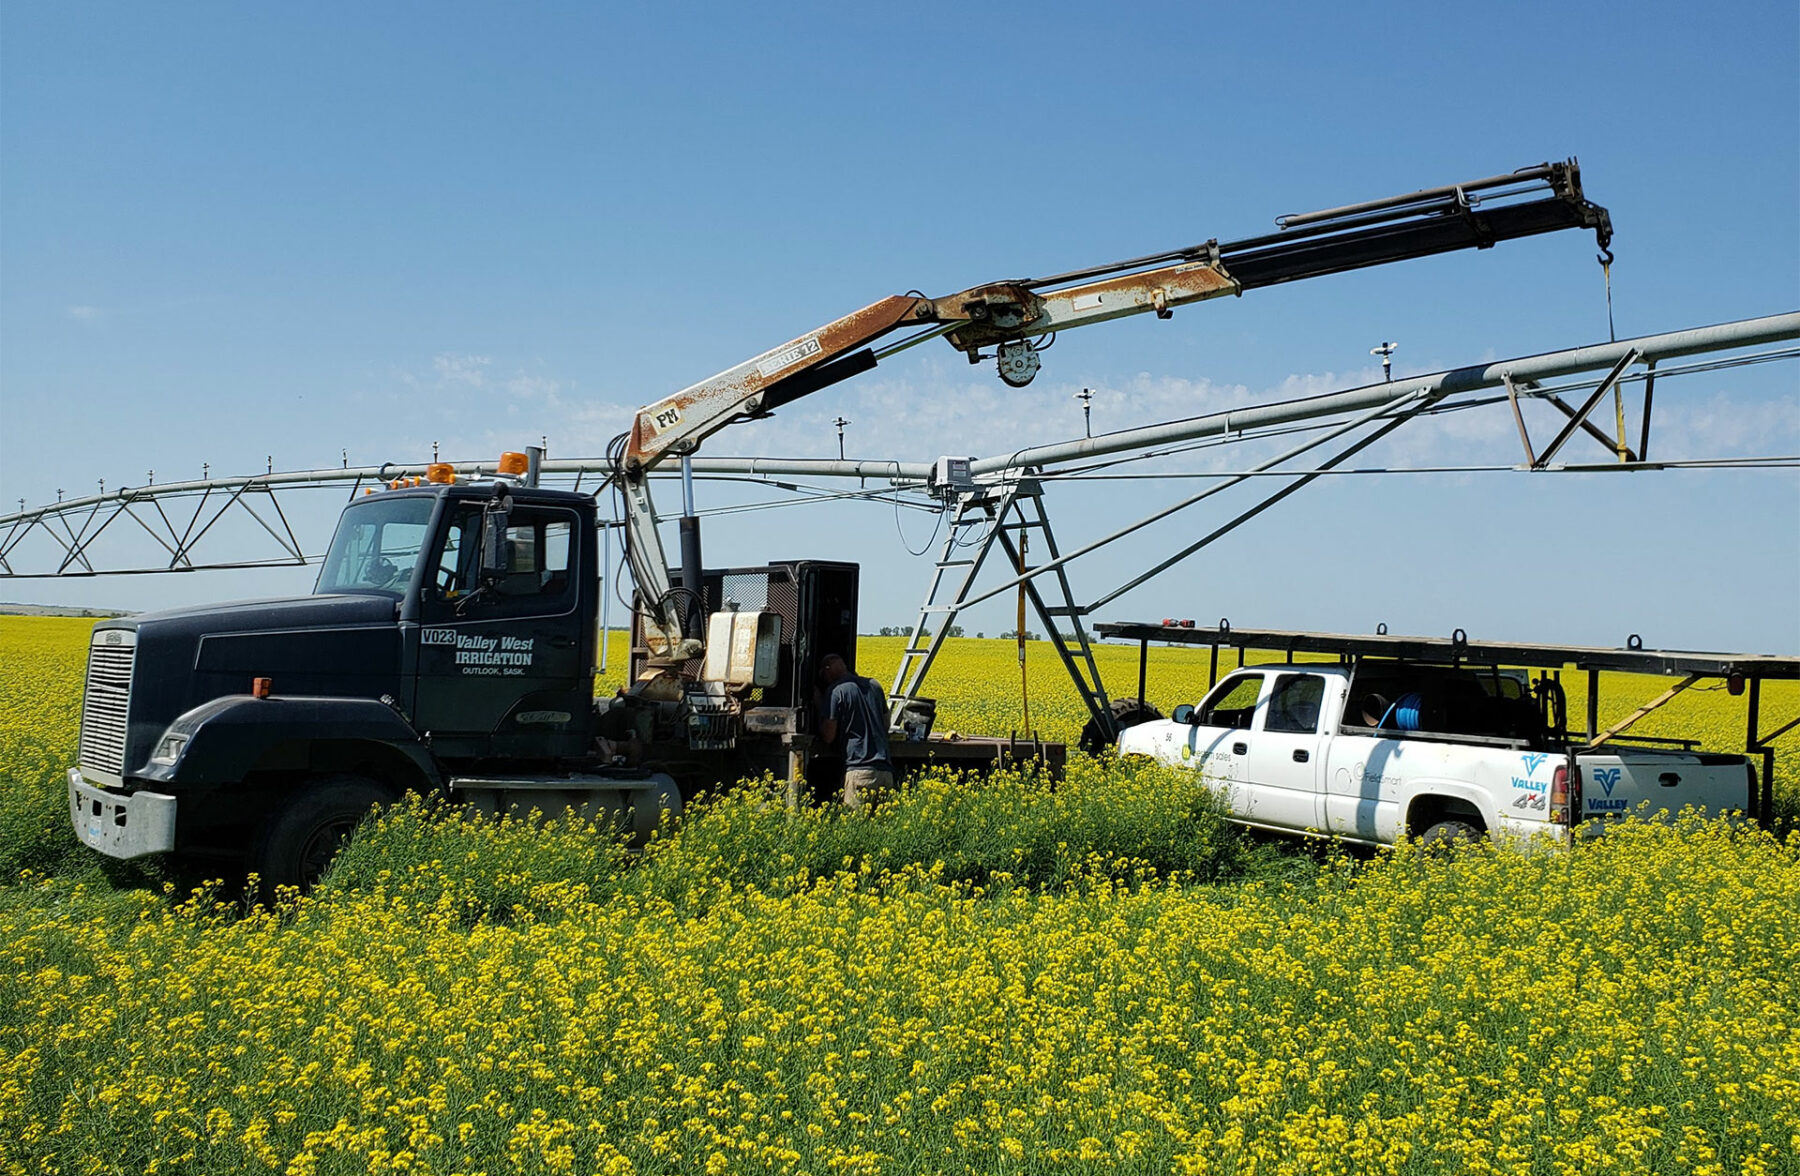 Western Water Management Service Truck Performing Irrigation Maintenance in a Field in Saskatchewan, Canada